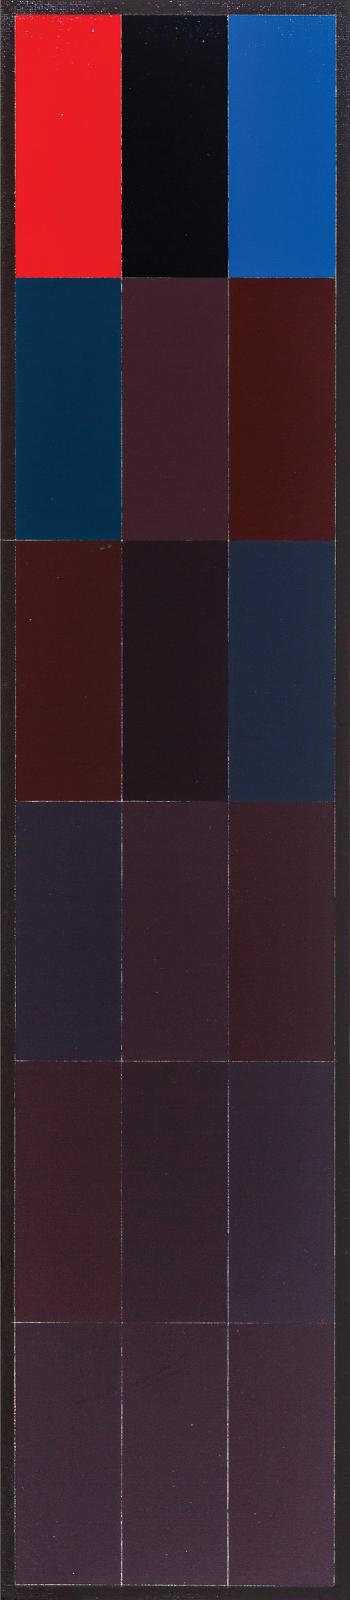 Jaan Poldaas (1948-2018) - Red, Black, Blue Entropy, 1981